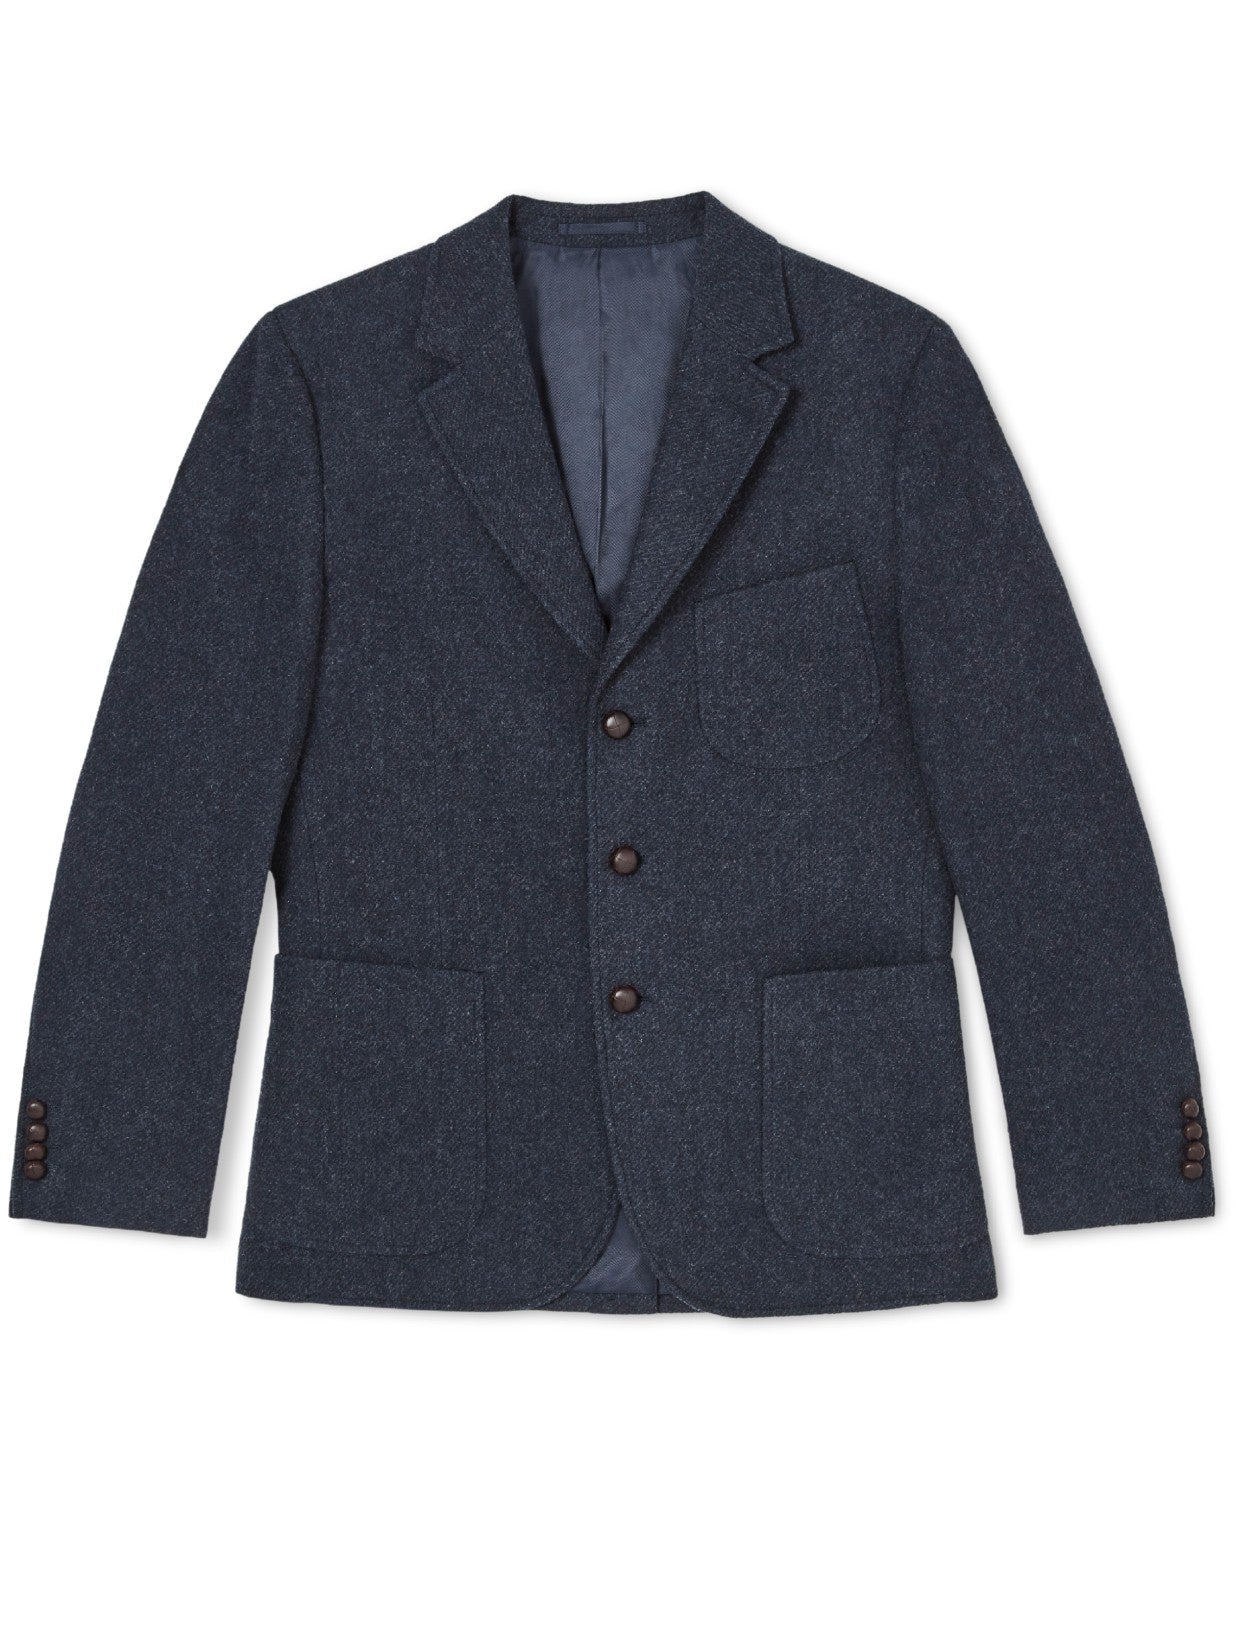 RMW W22 Windsor Sports Coat - Thomson's Suits Ltd - Navy - 38 - 61072